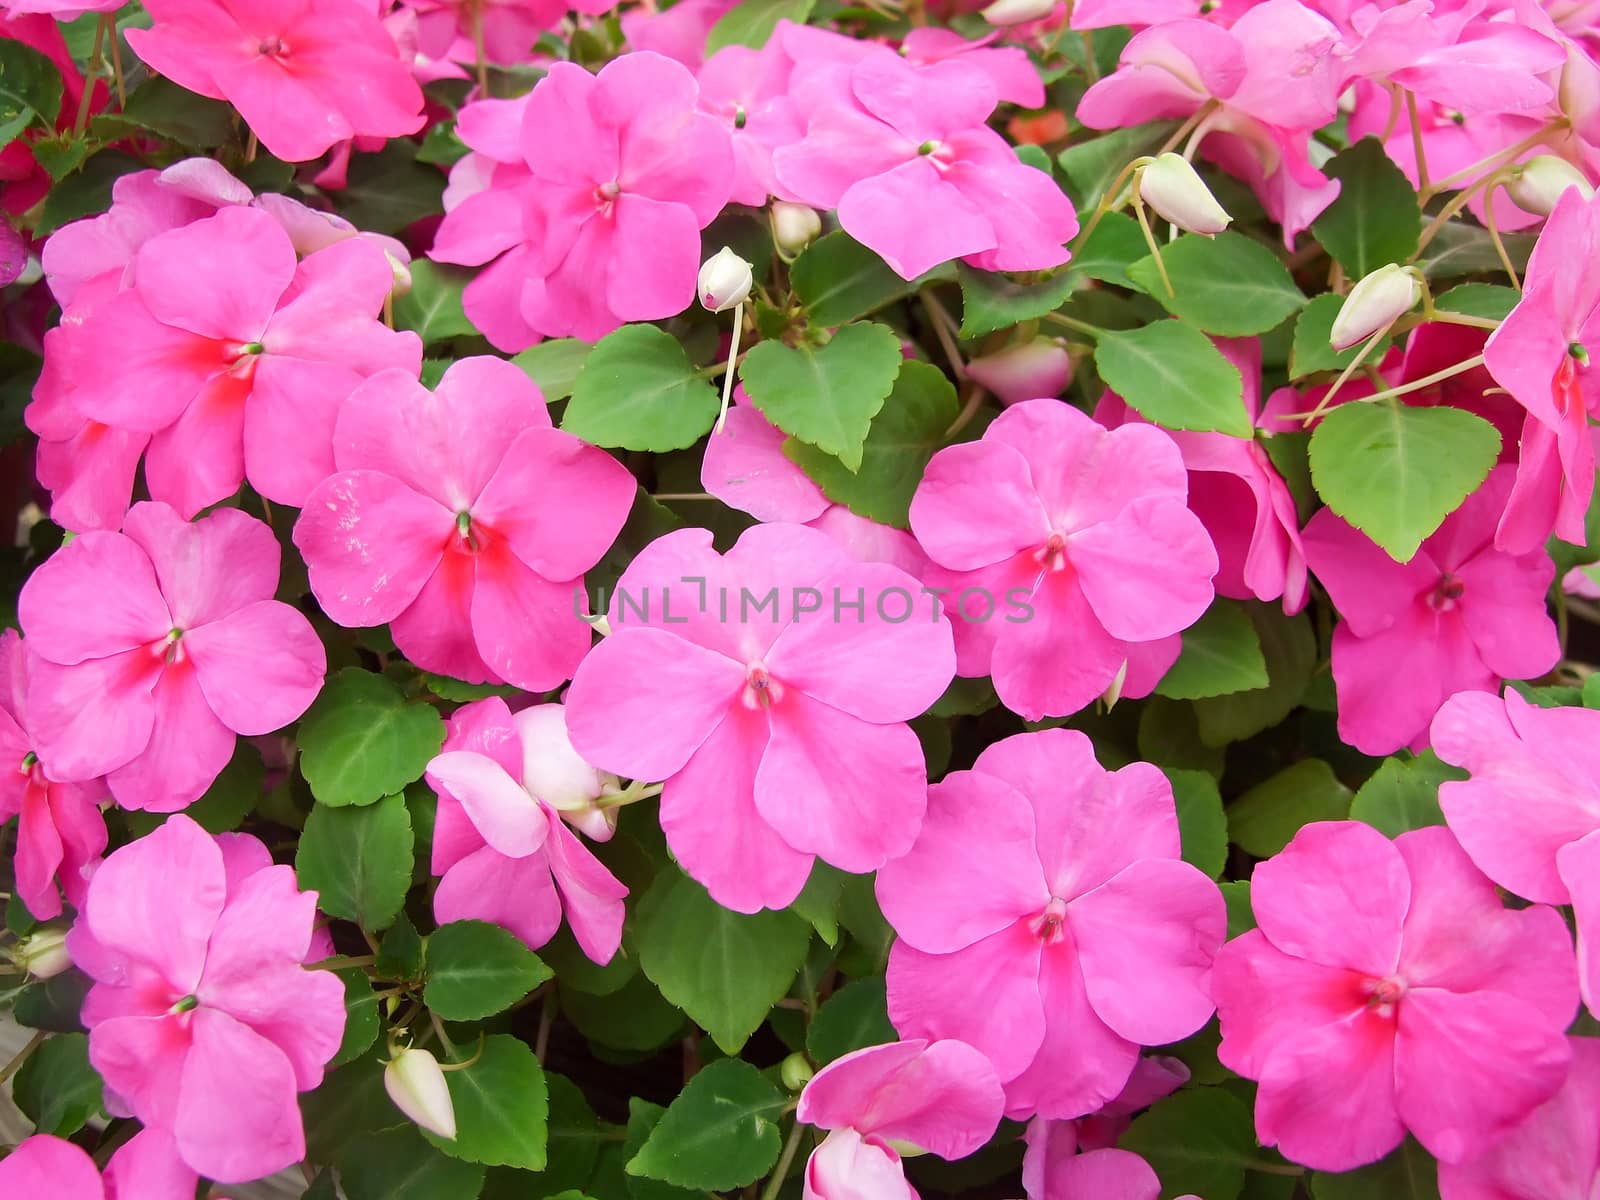 pink impatiens, scientific name Impatiens walleriana flowers als by yuiyuize